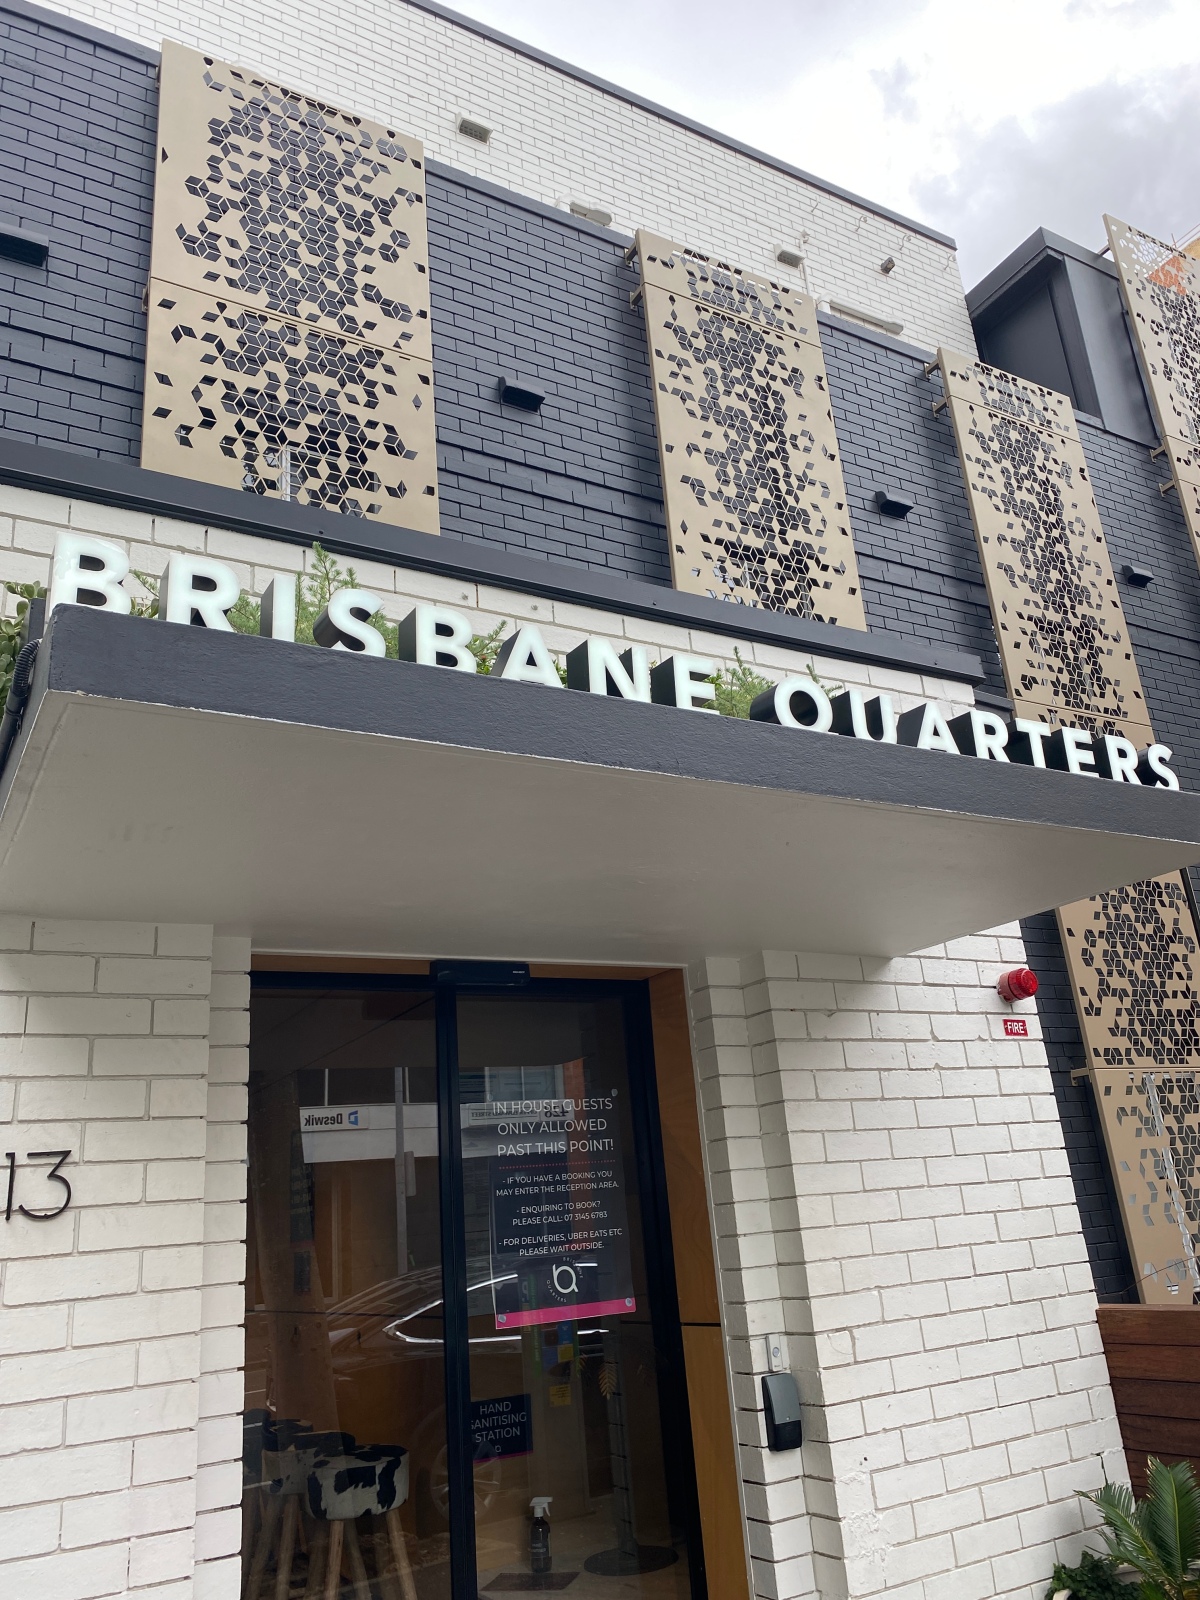 Brisbane Quarters
